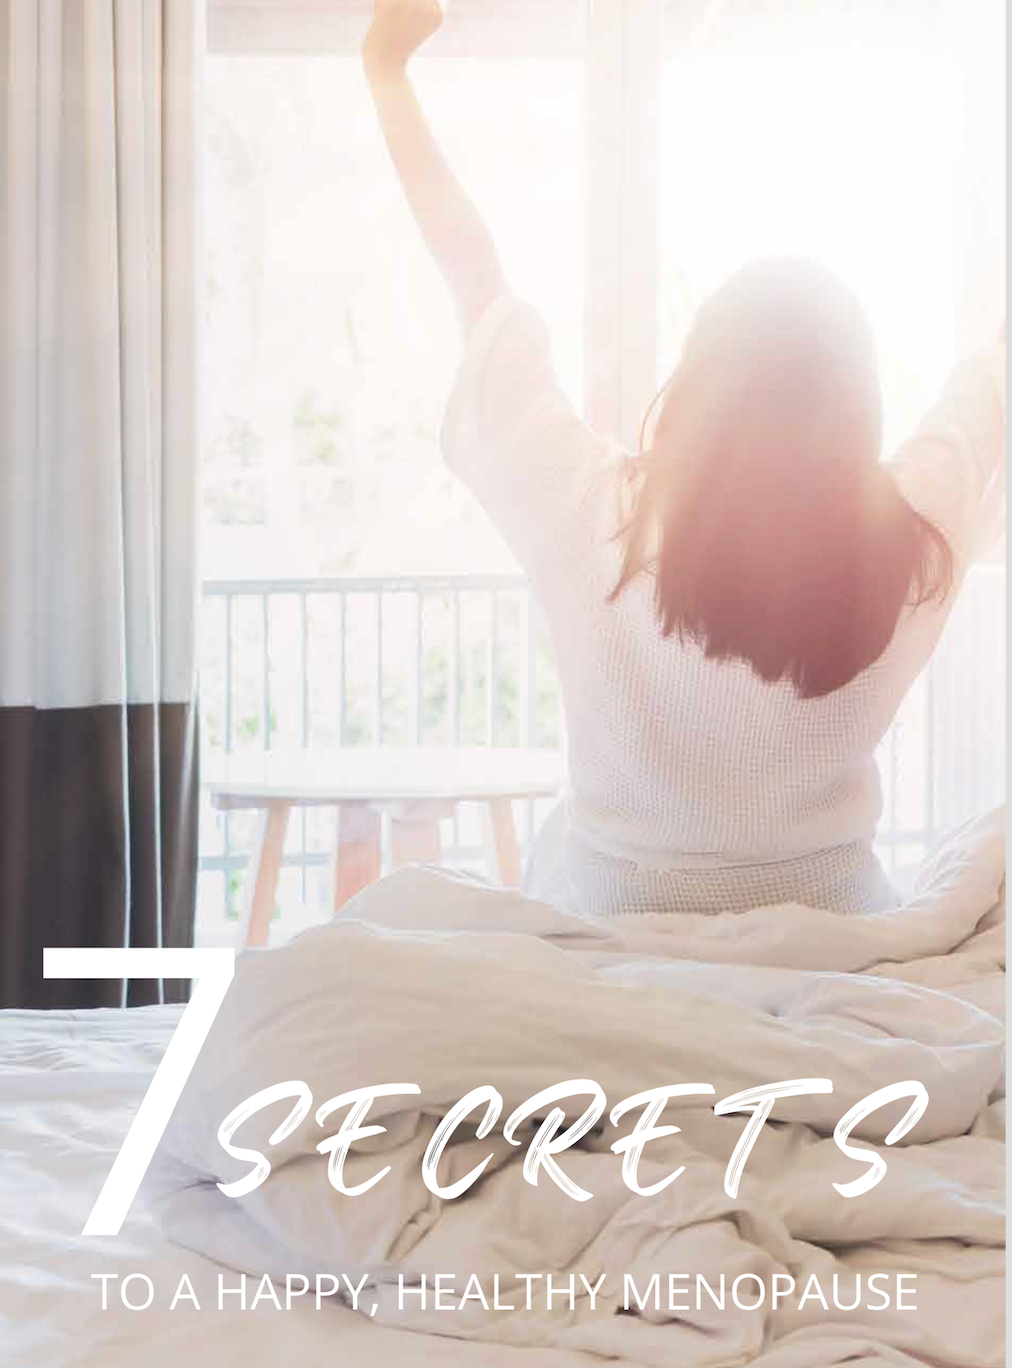 7 secrets brochure